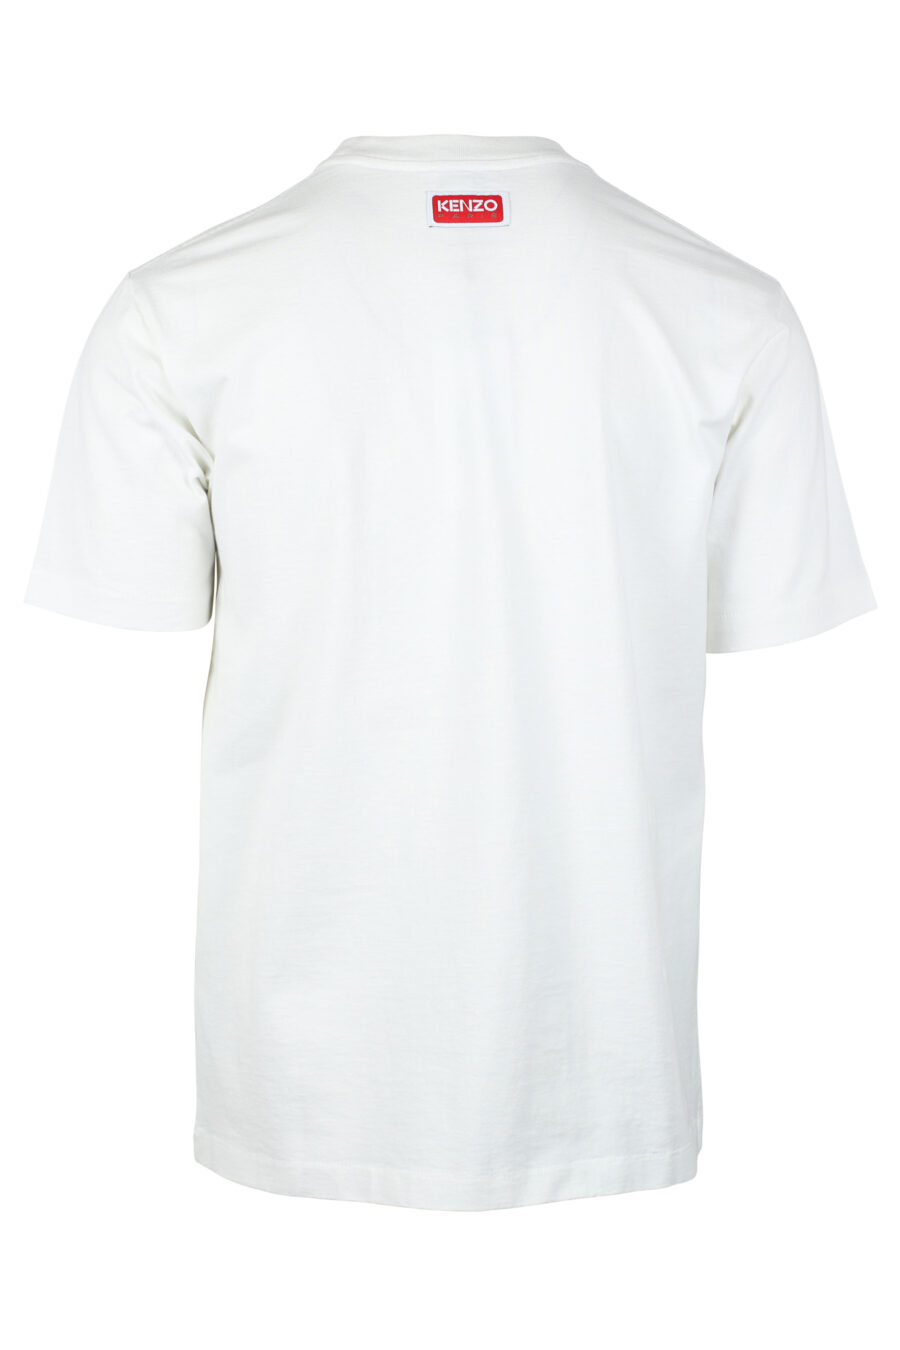 Camiseta blanca con maxilogo "K" violeta - IMG 4682